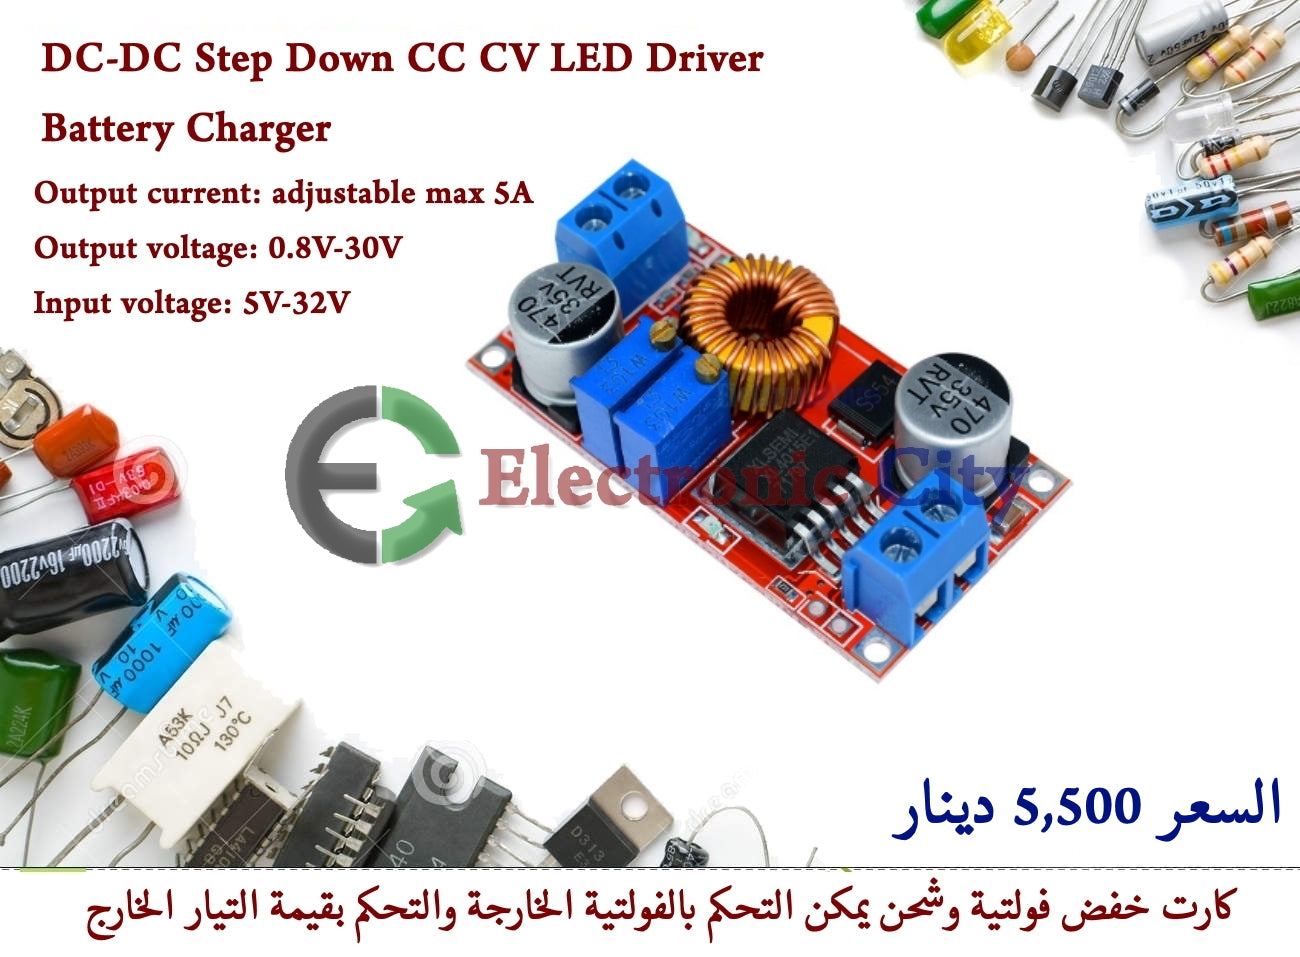 DC-DC Step Down CC CV LED Driver Battery Charger #G8 010445